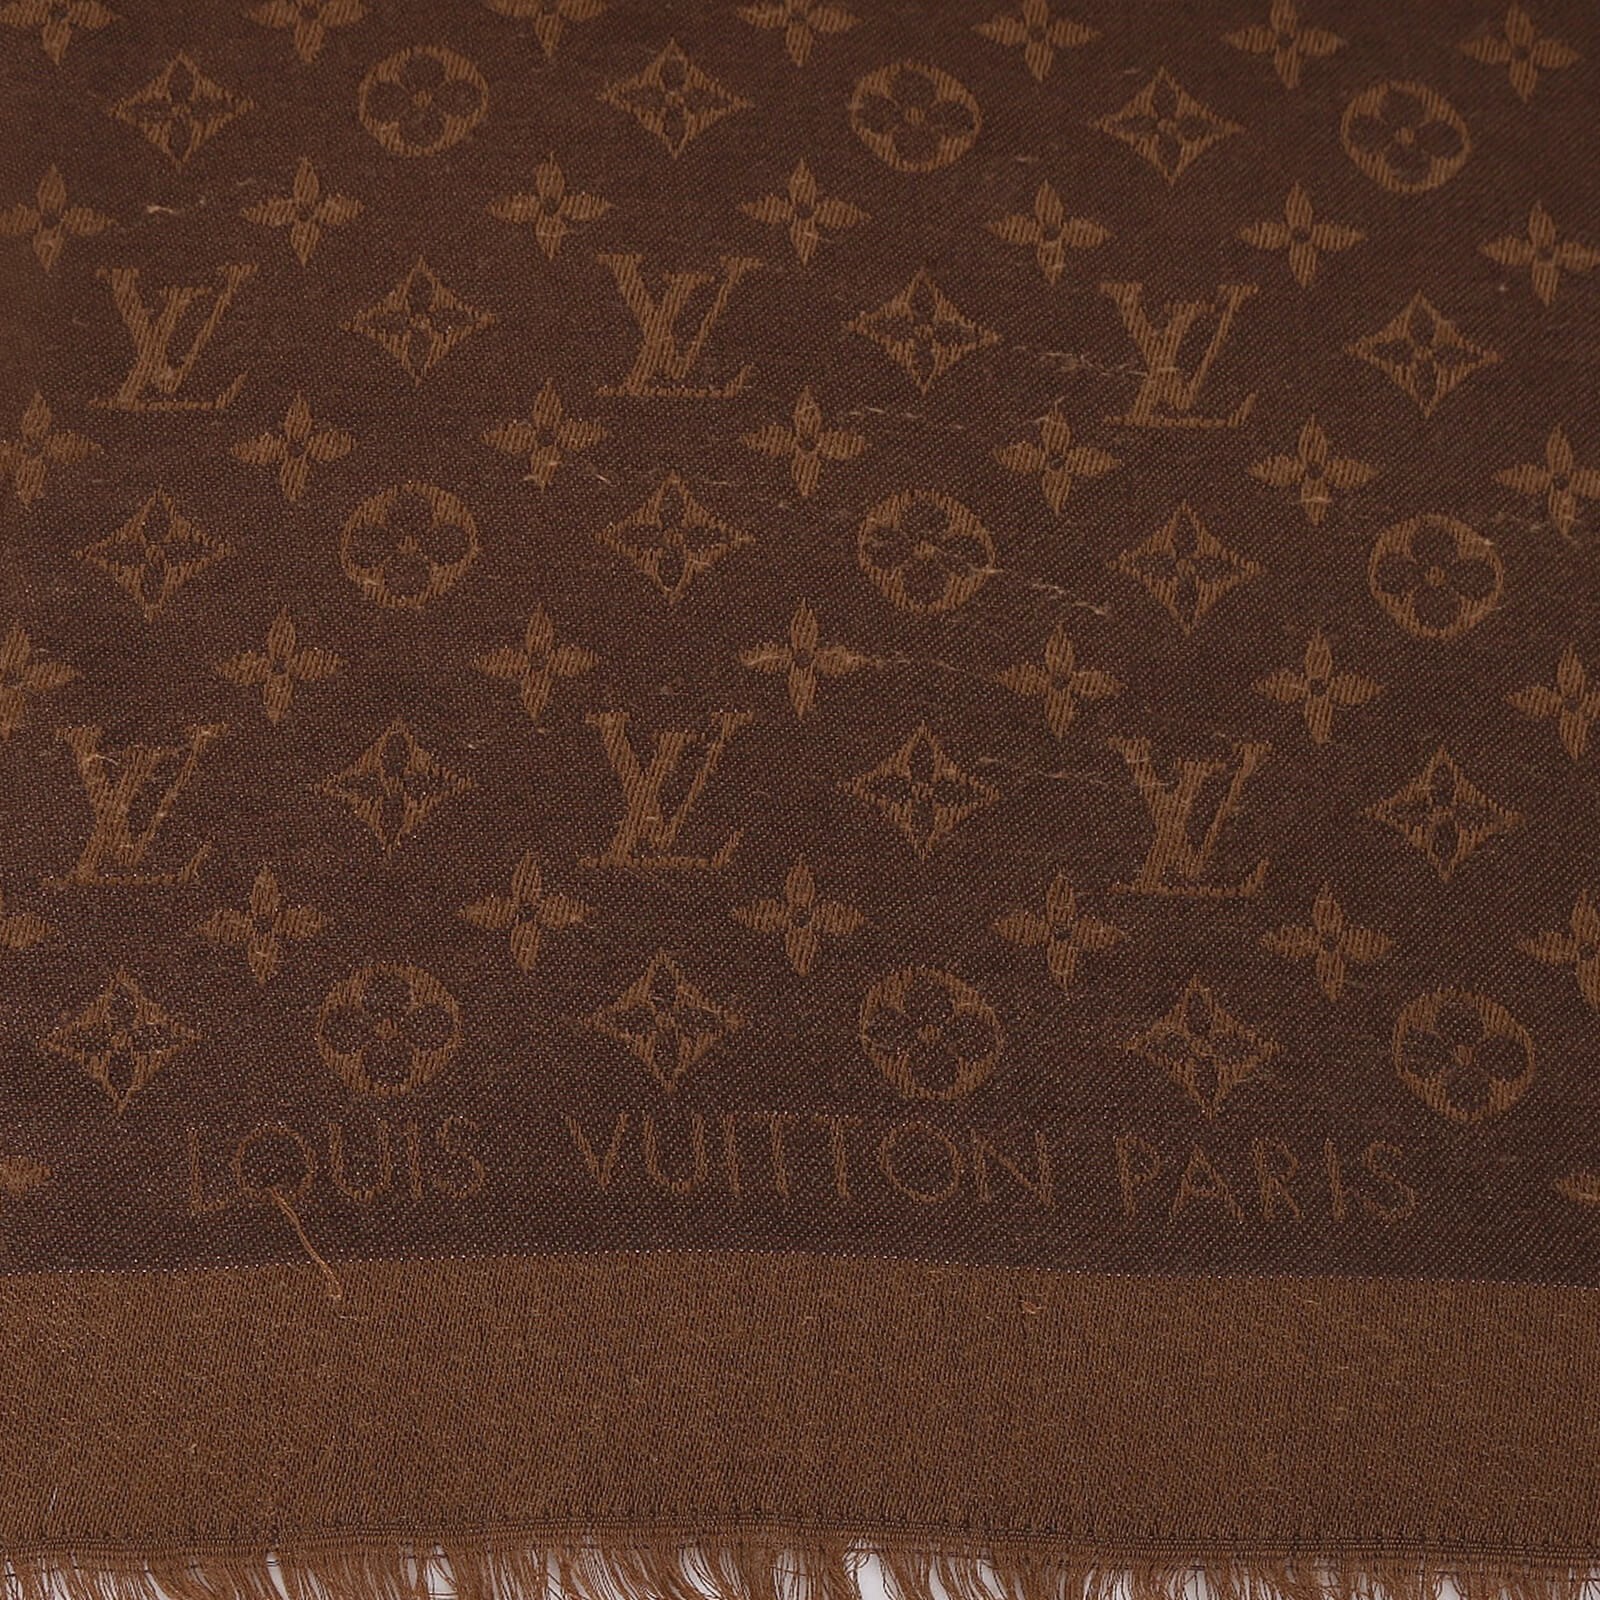 monogram denim shawl brown